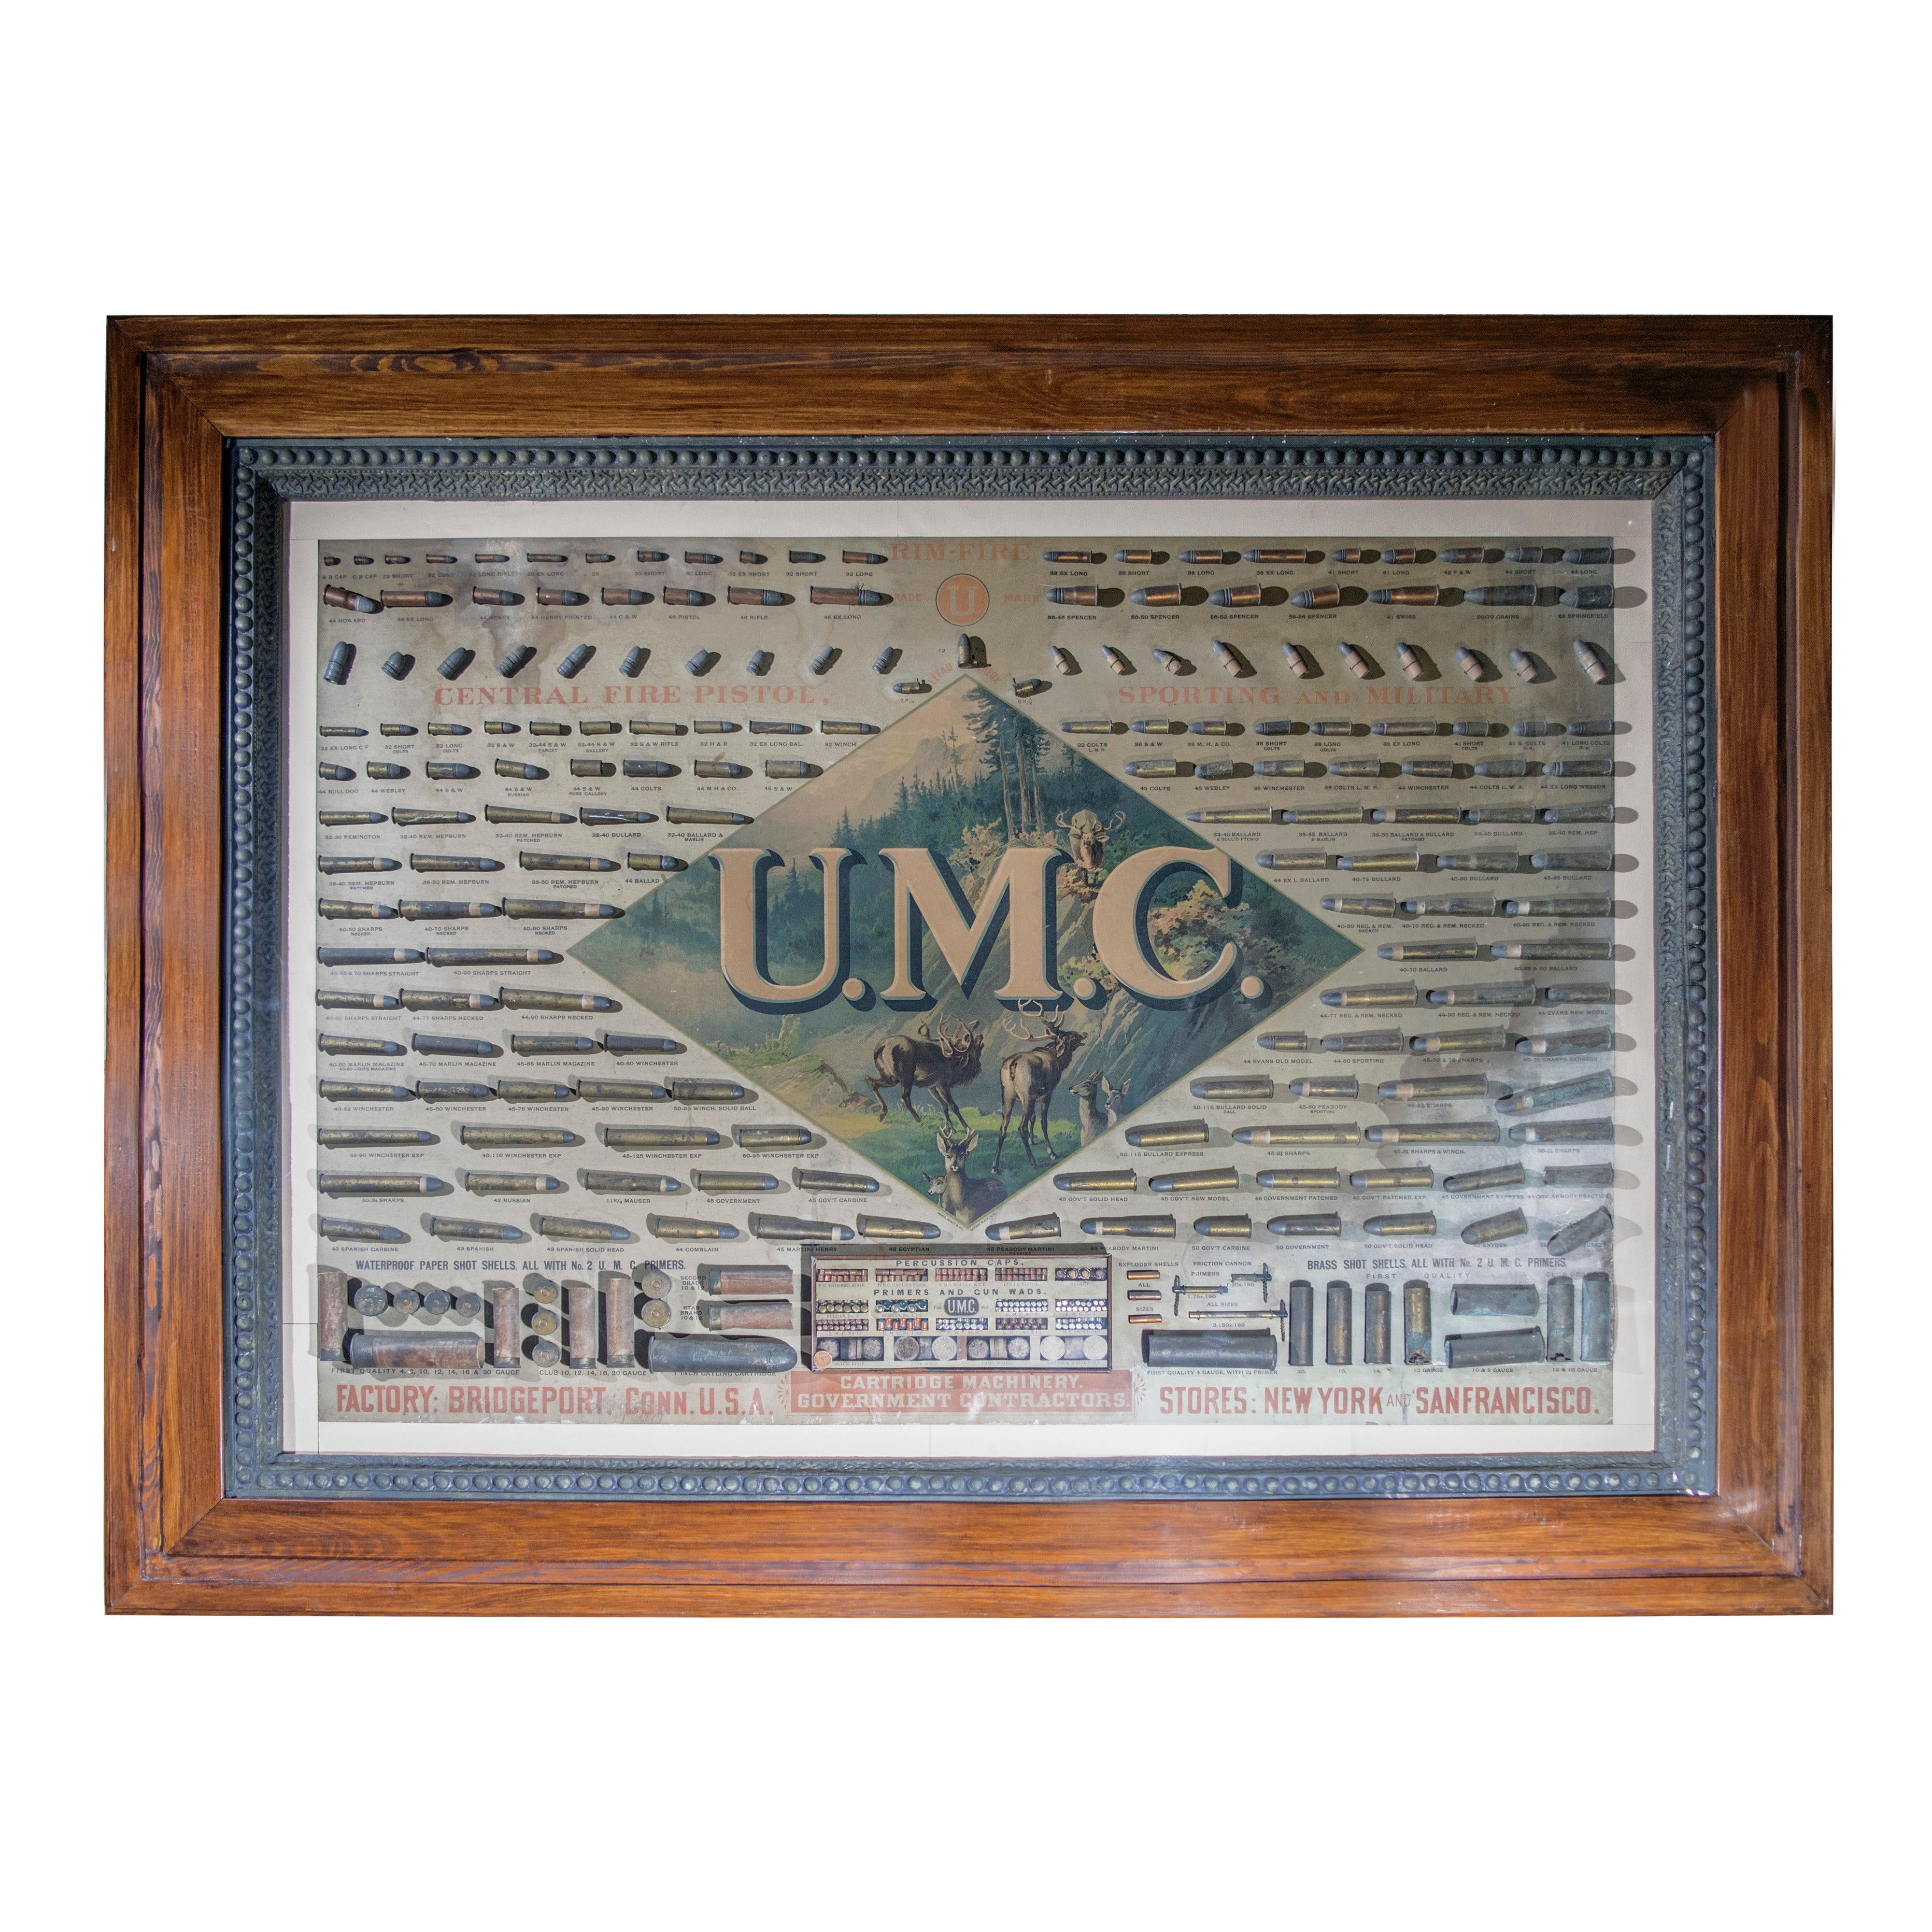 UMC Cartridge Board, Sporting Goods, Advertising, Bullet Board